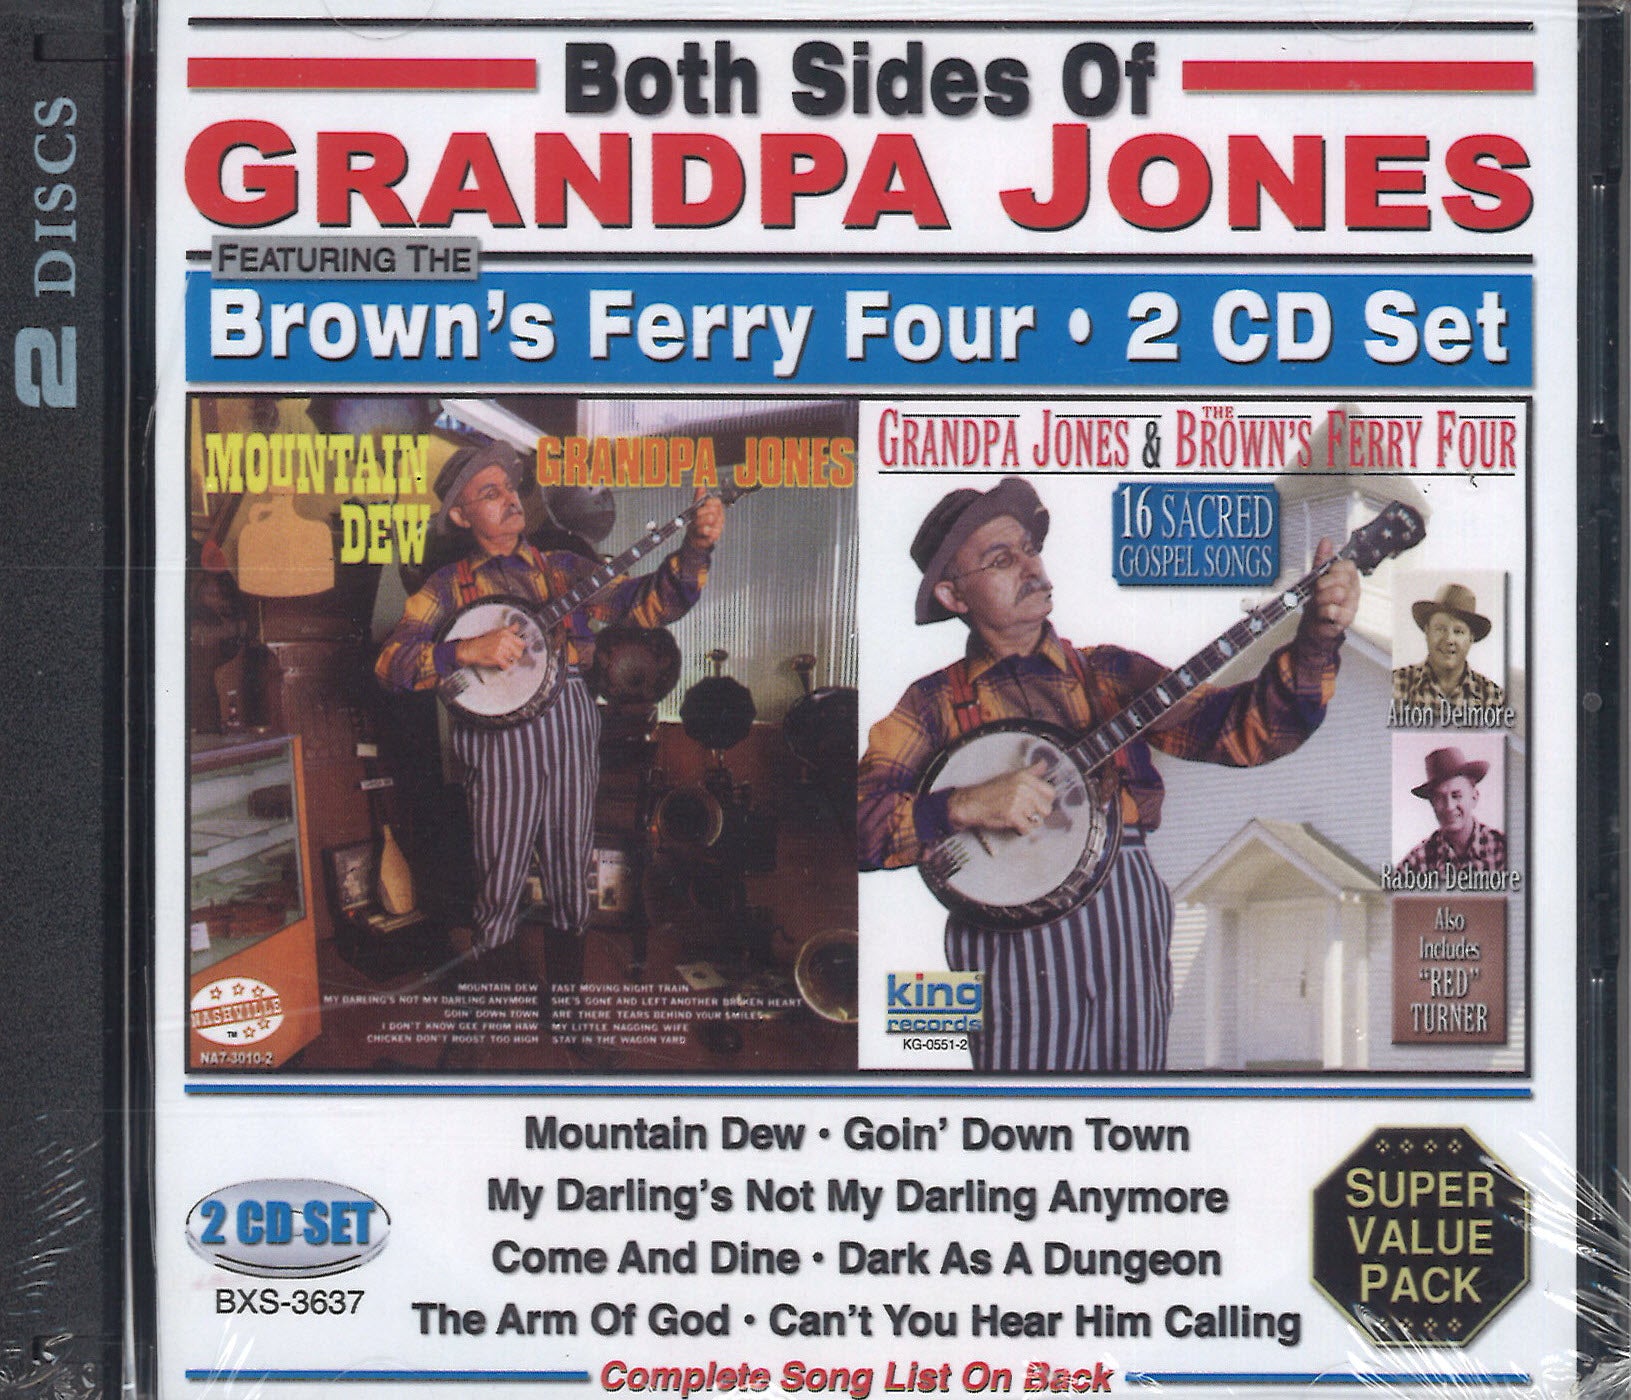 Both Sides Of Grandpa Jones: 2 CD Set